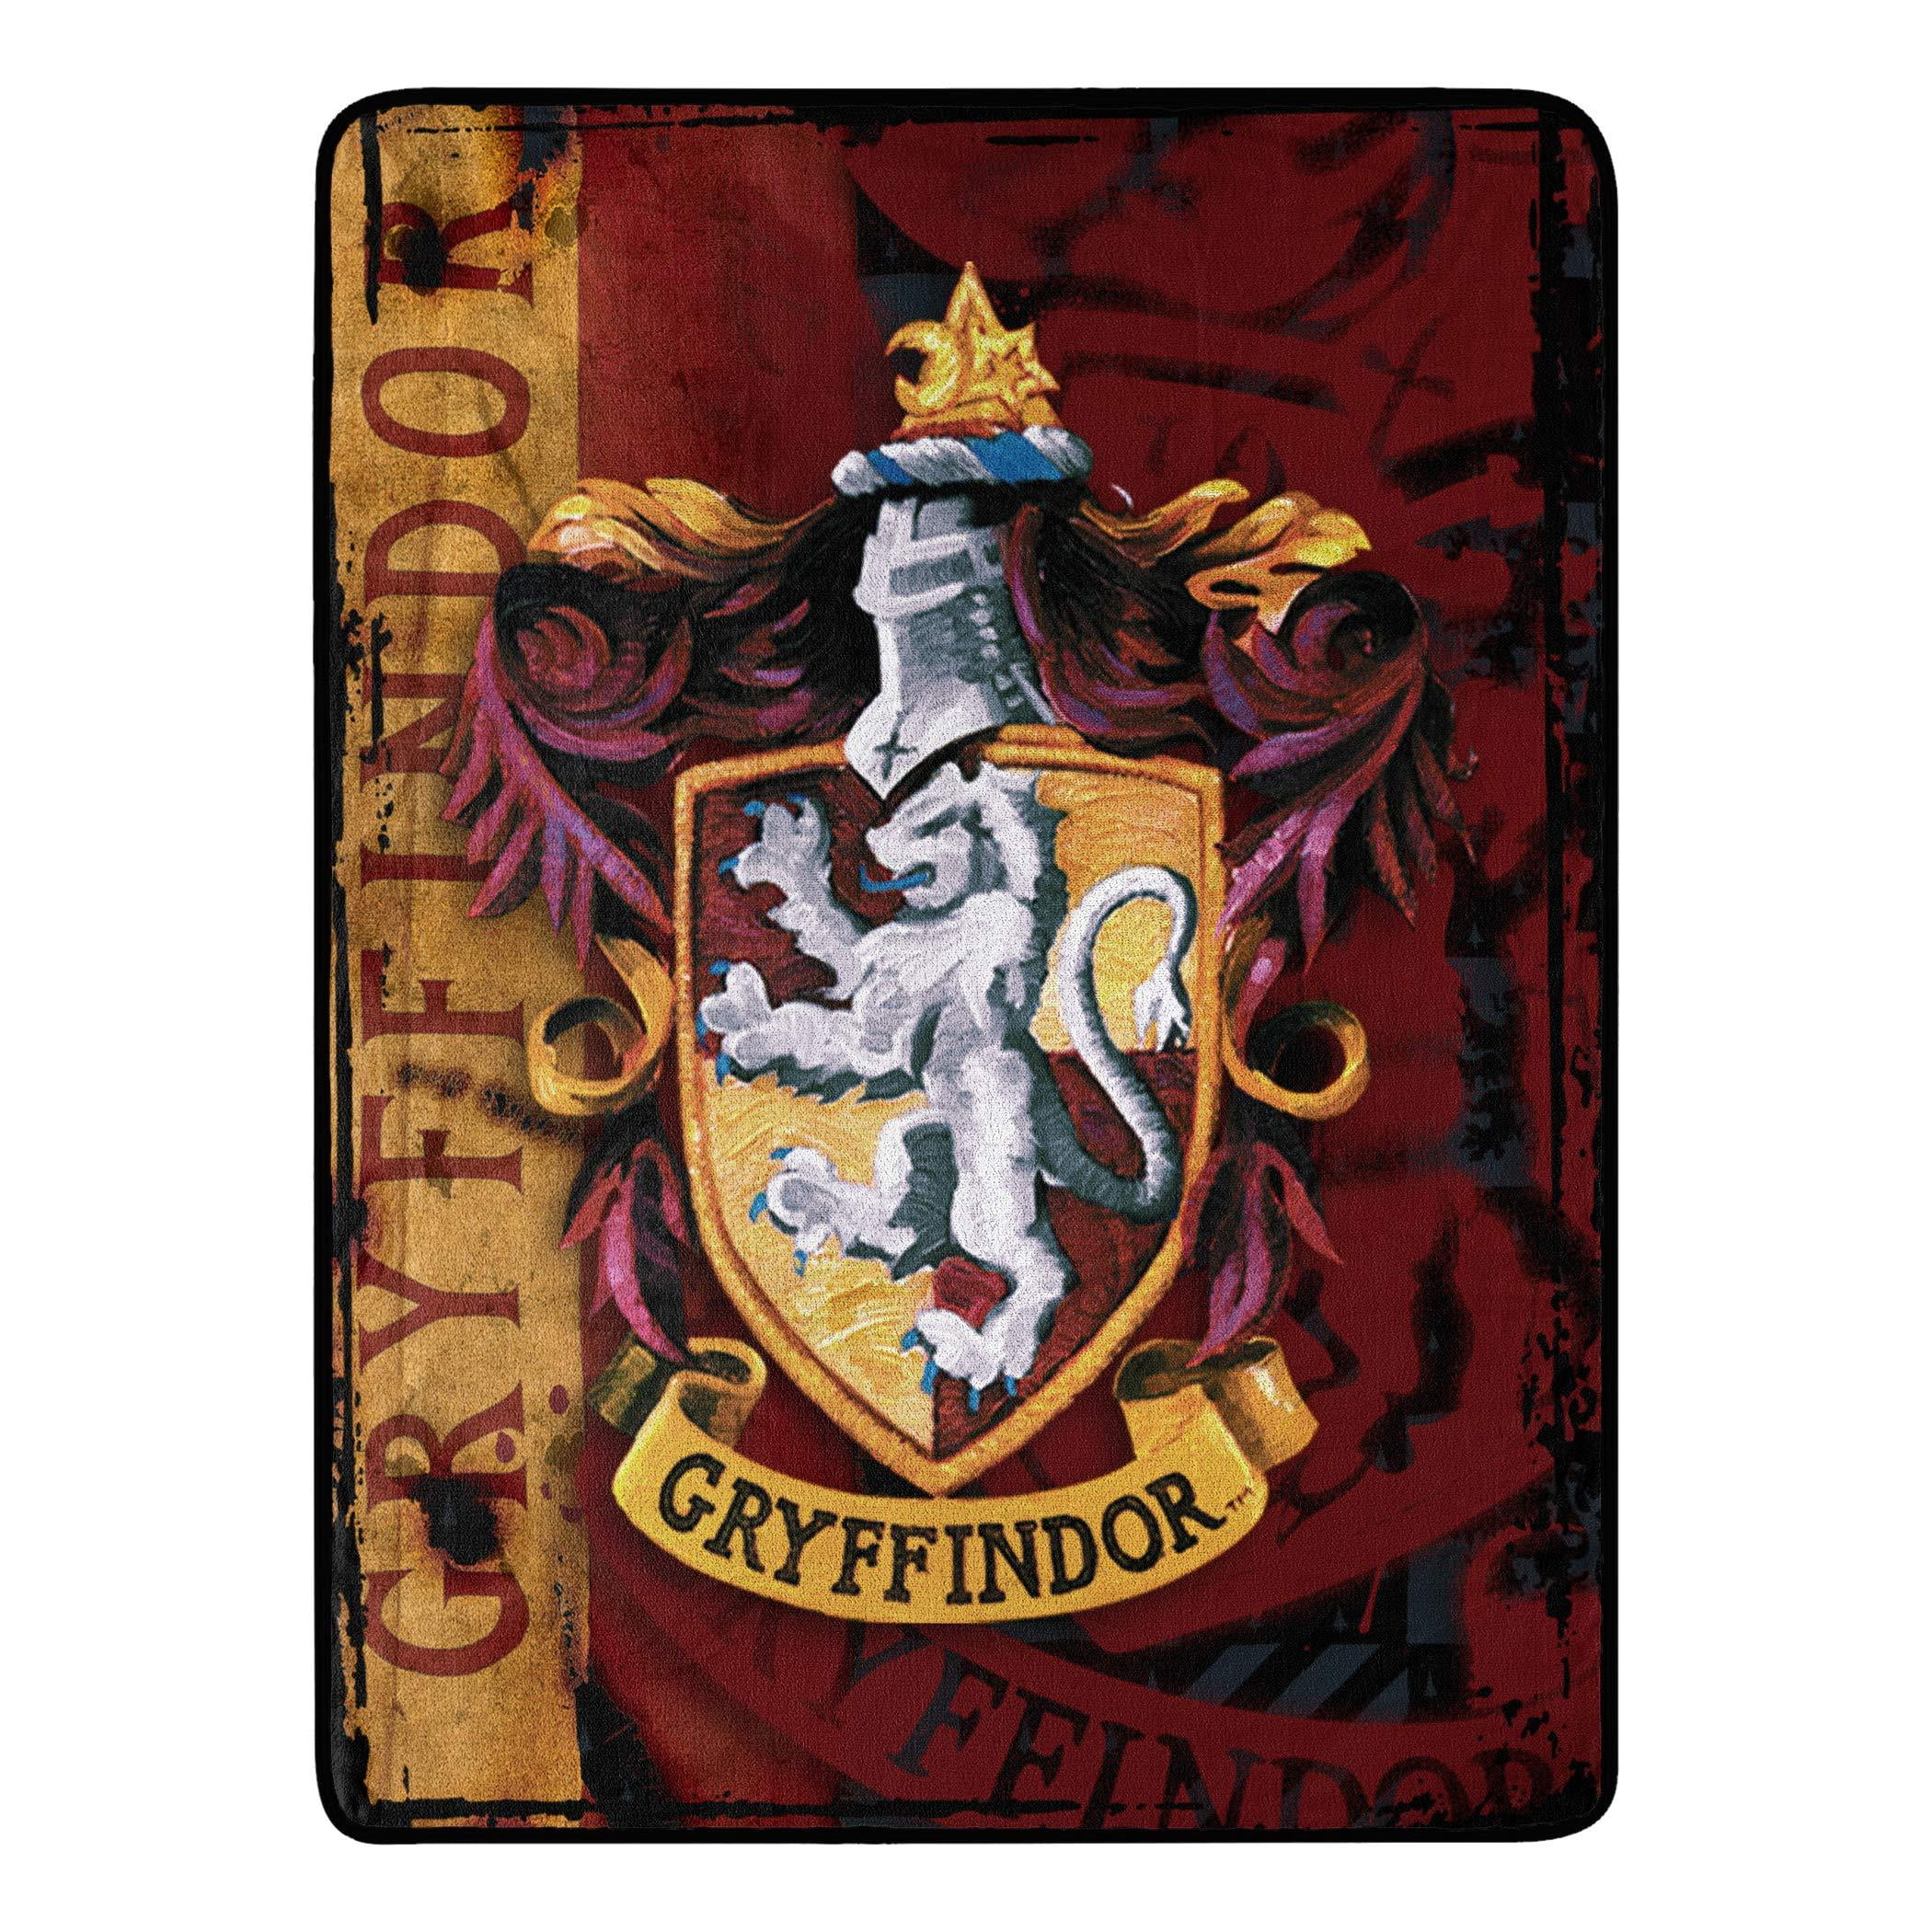 New Harry Potter Laundry Bag Holds 2 Loads Hogwarts Crest Print 3 & Up 24 x 36 